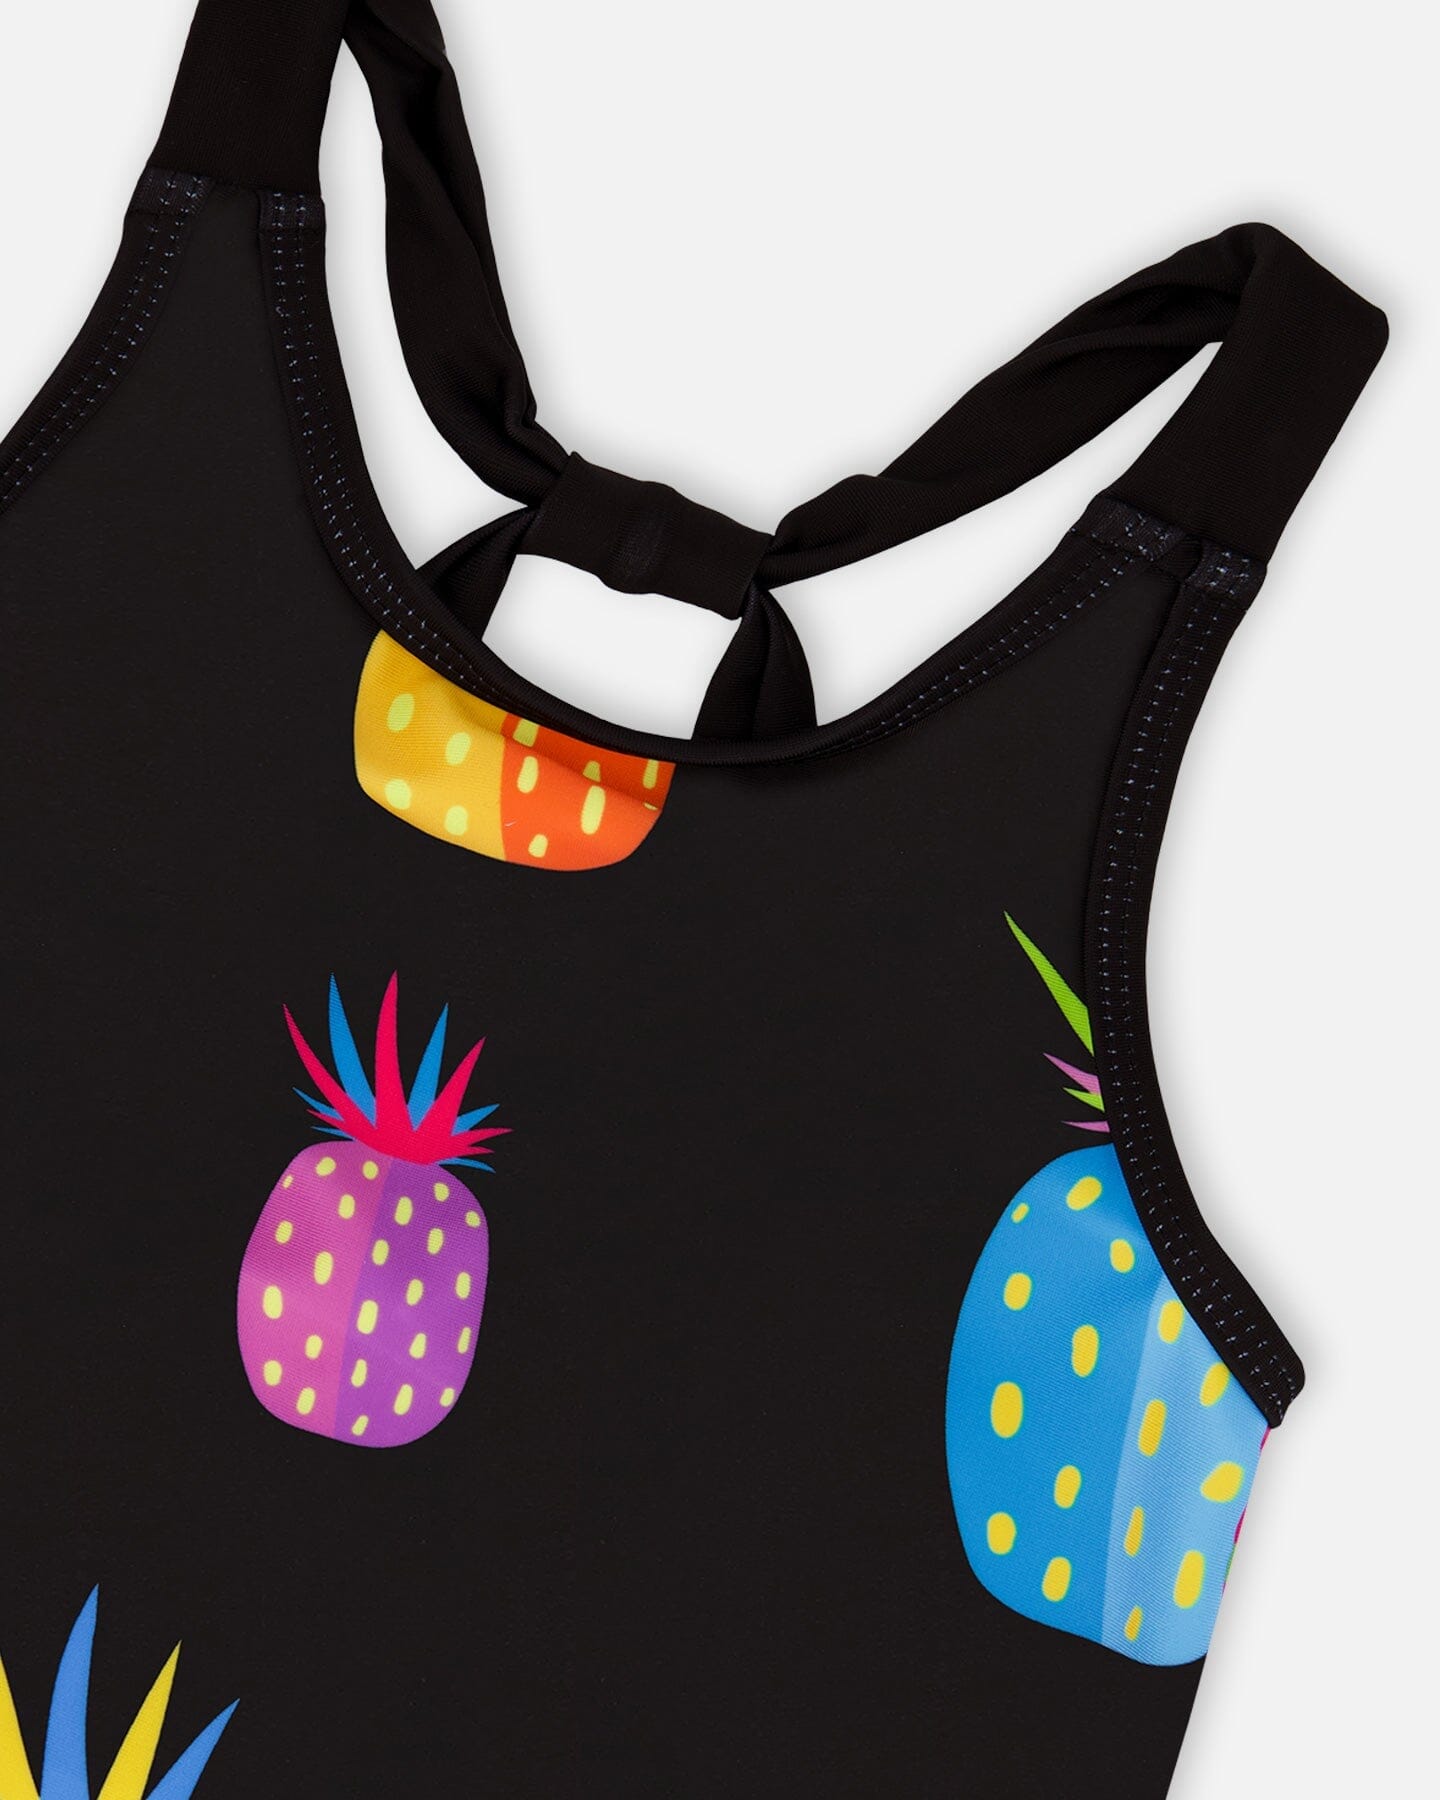 Beach Dress Black Printed Pineapples - F30NG24_049